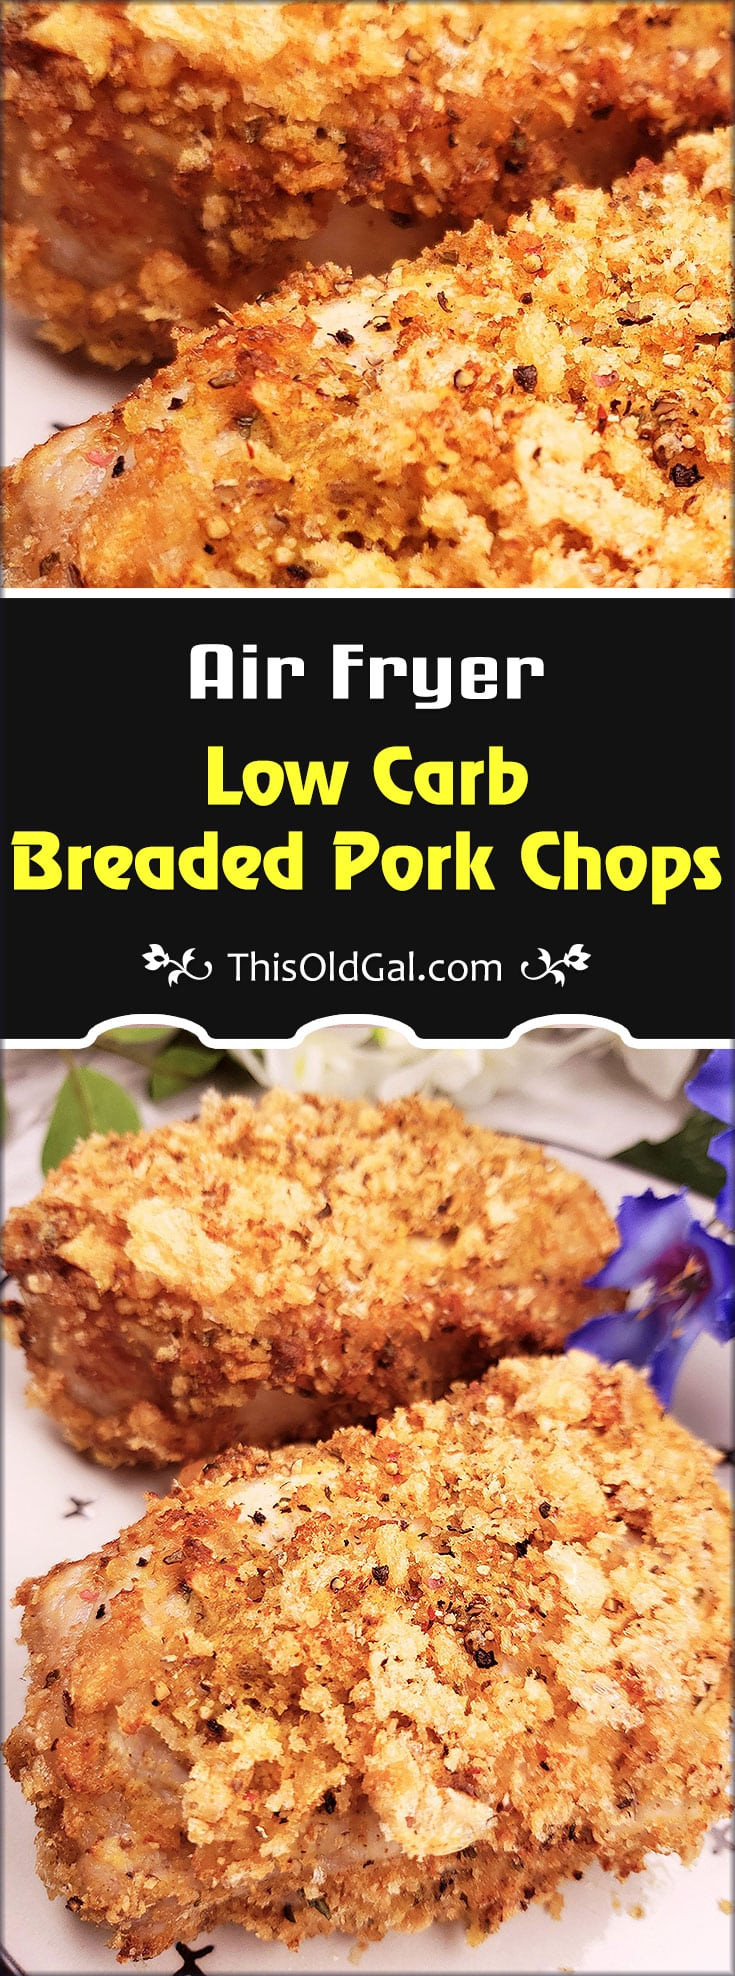 Keto Breaded Pork Chops
 Low Carb Breaded Pork Chops in the Air Fryer